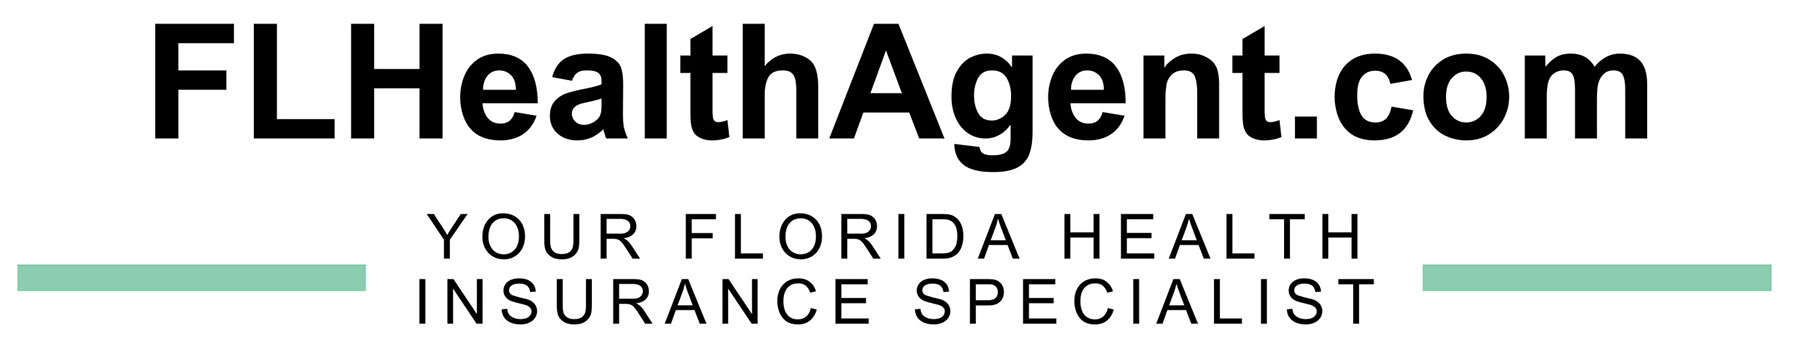 Florida health agent